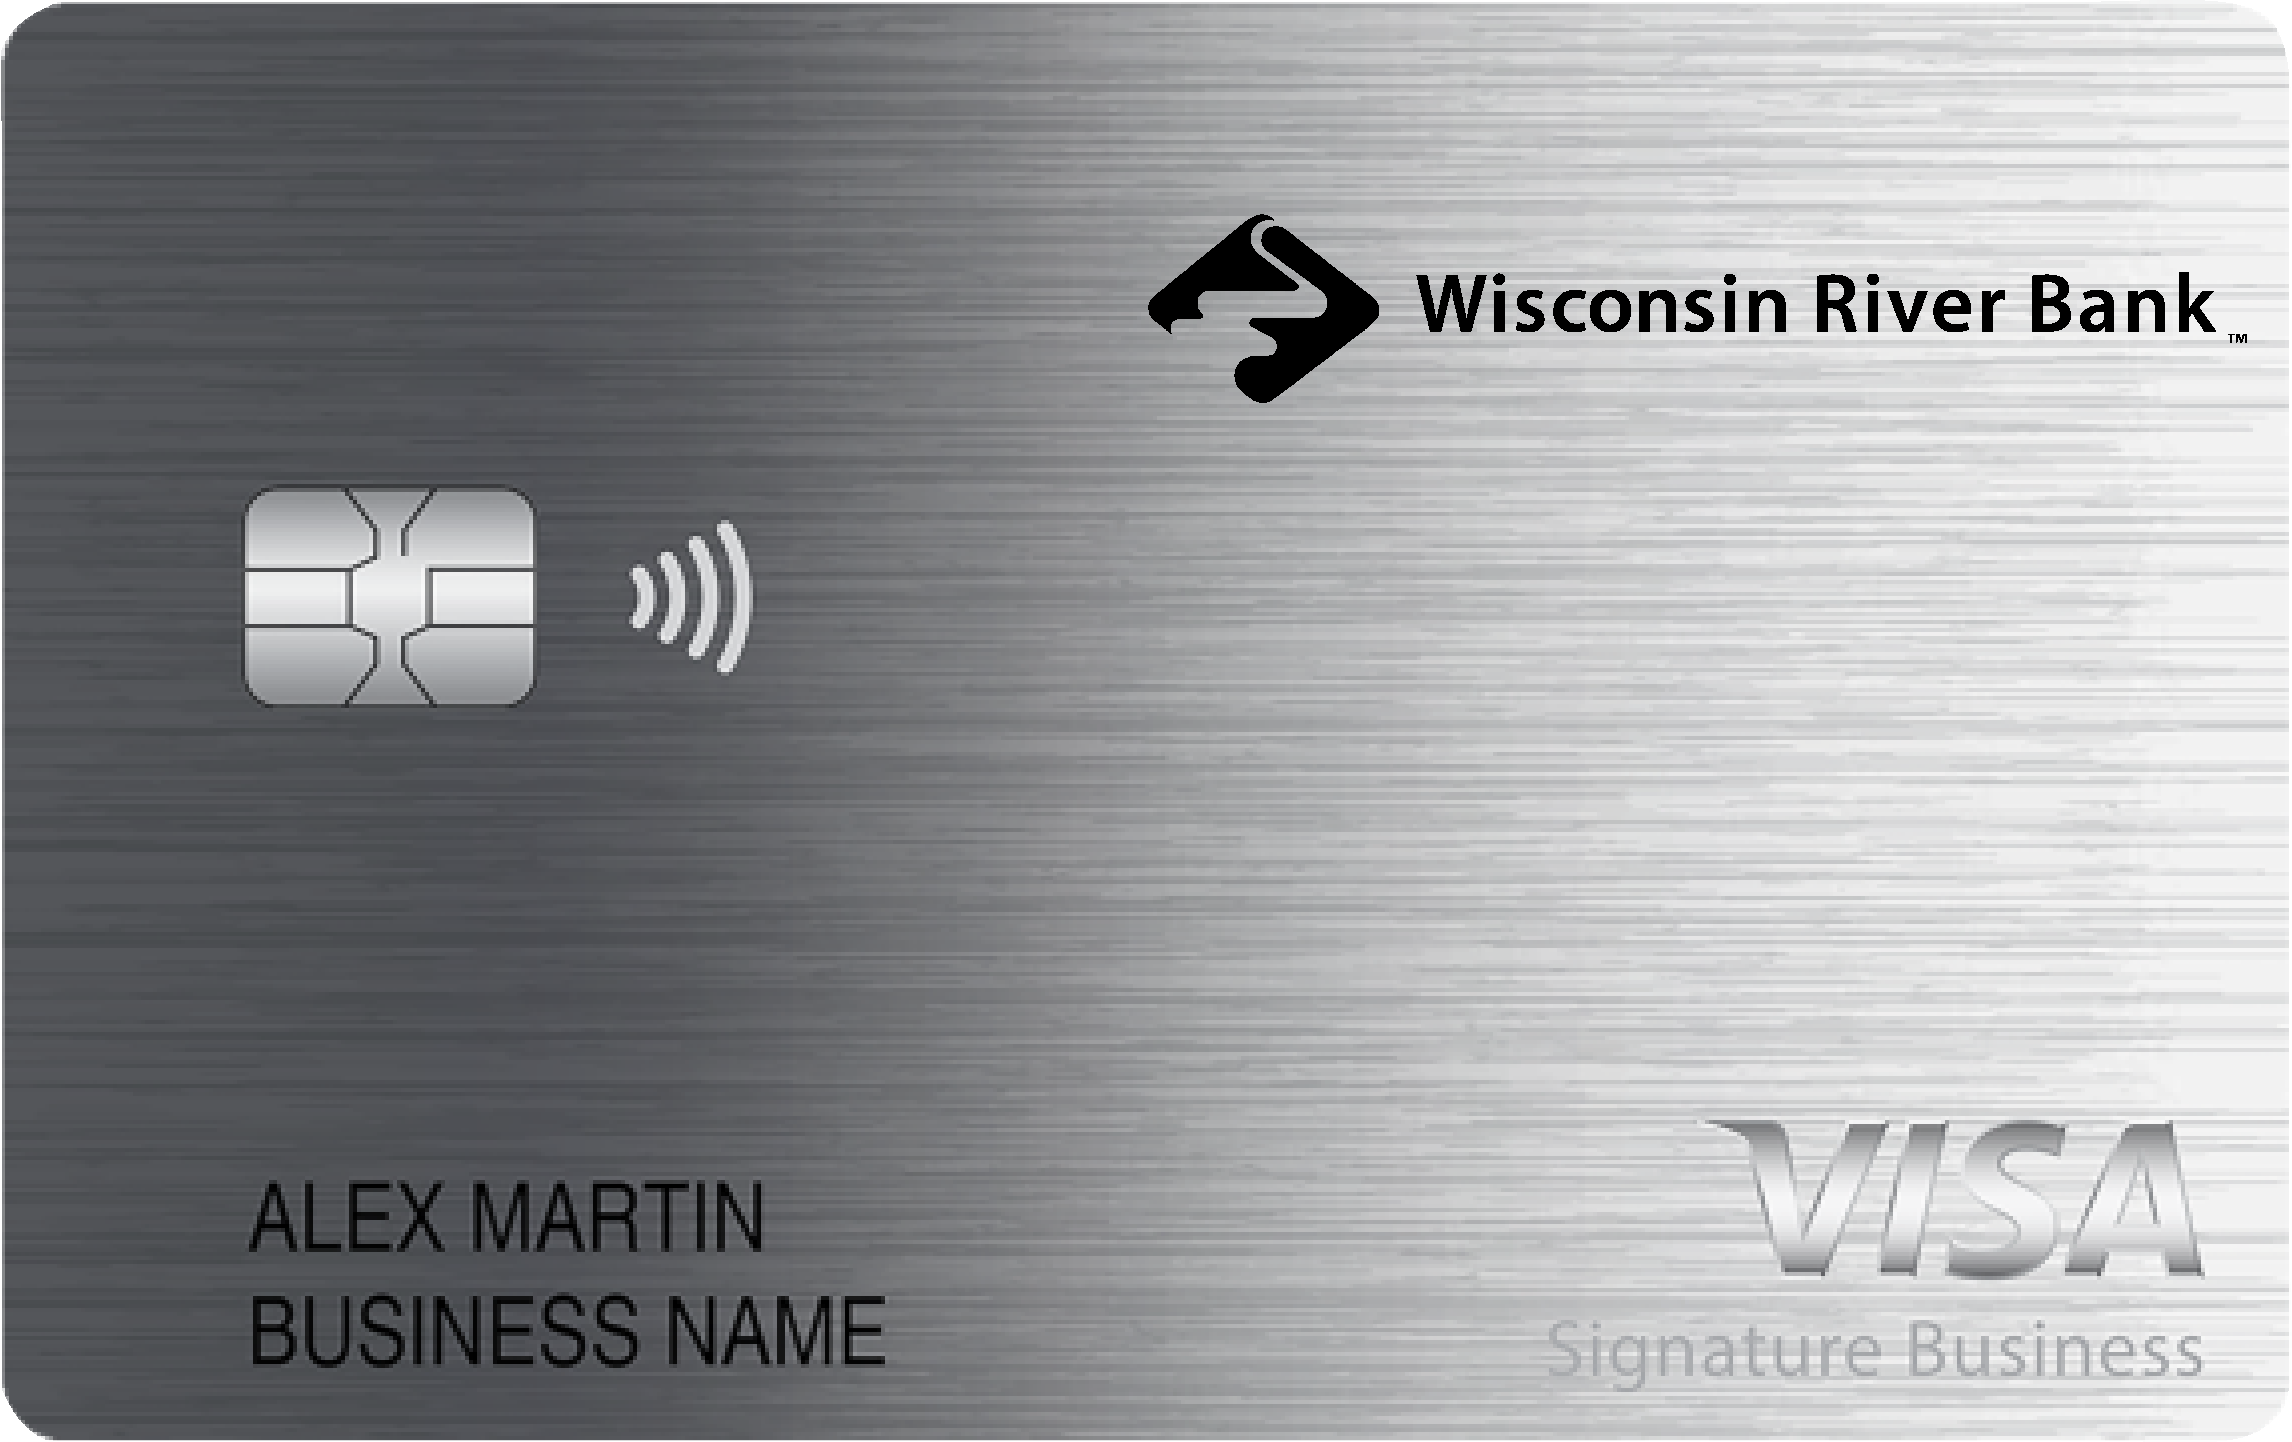 Wisconsin River Bank Smart Business Rewards Card